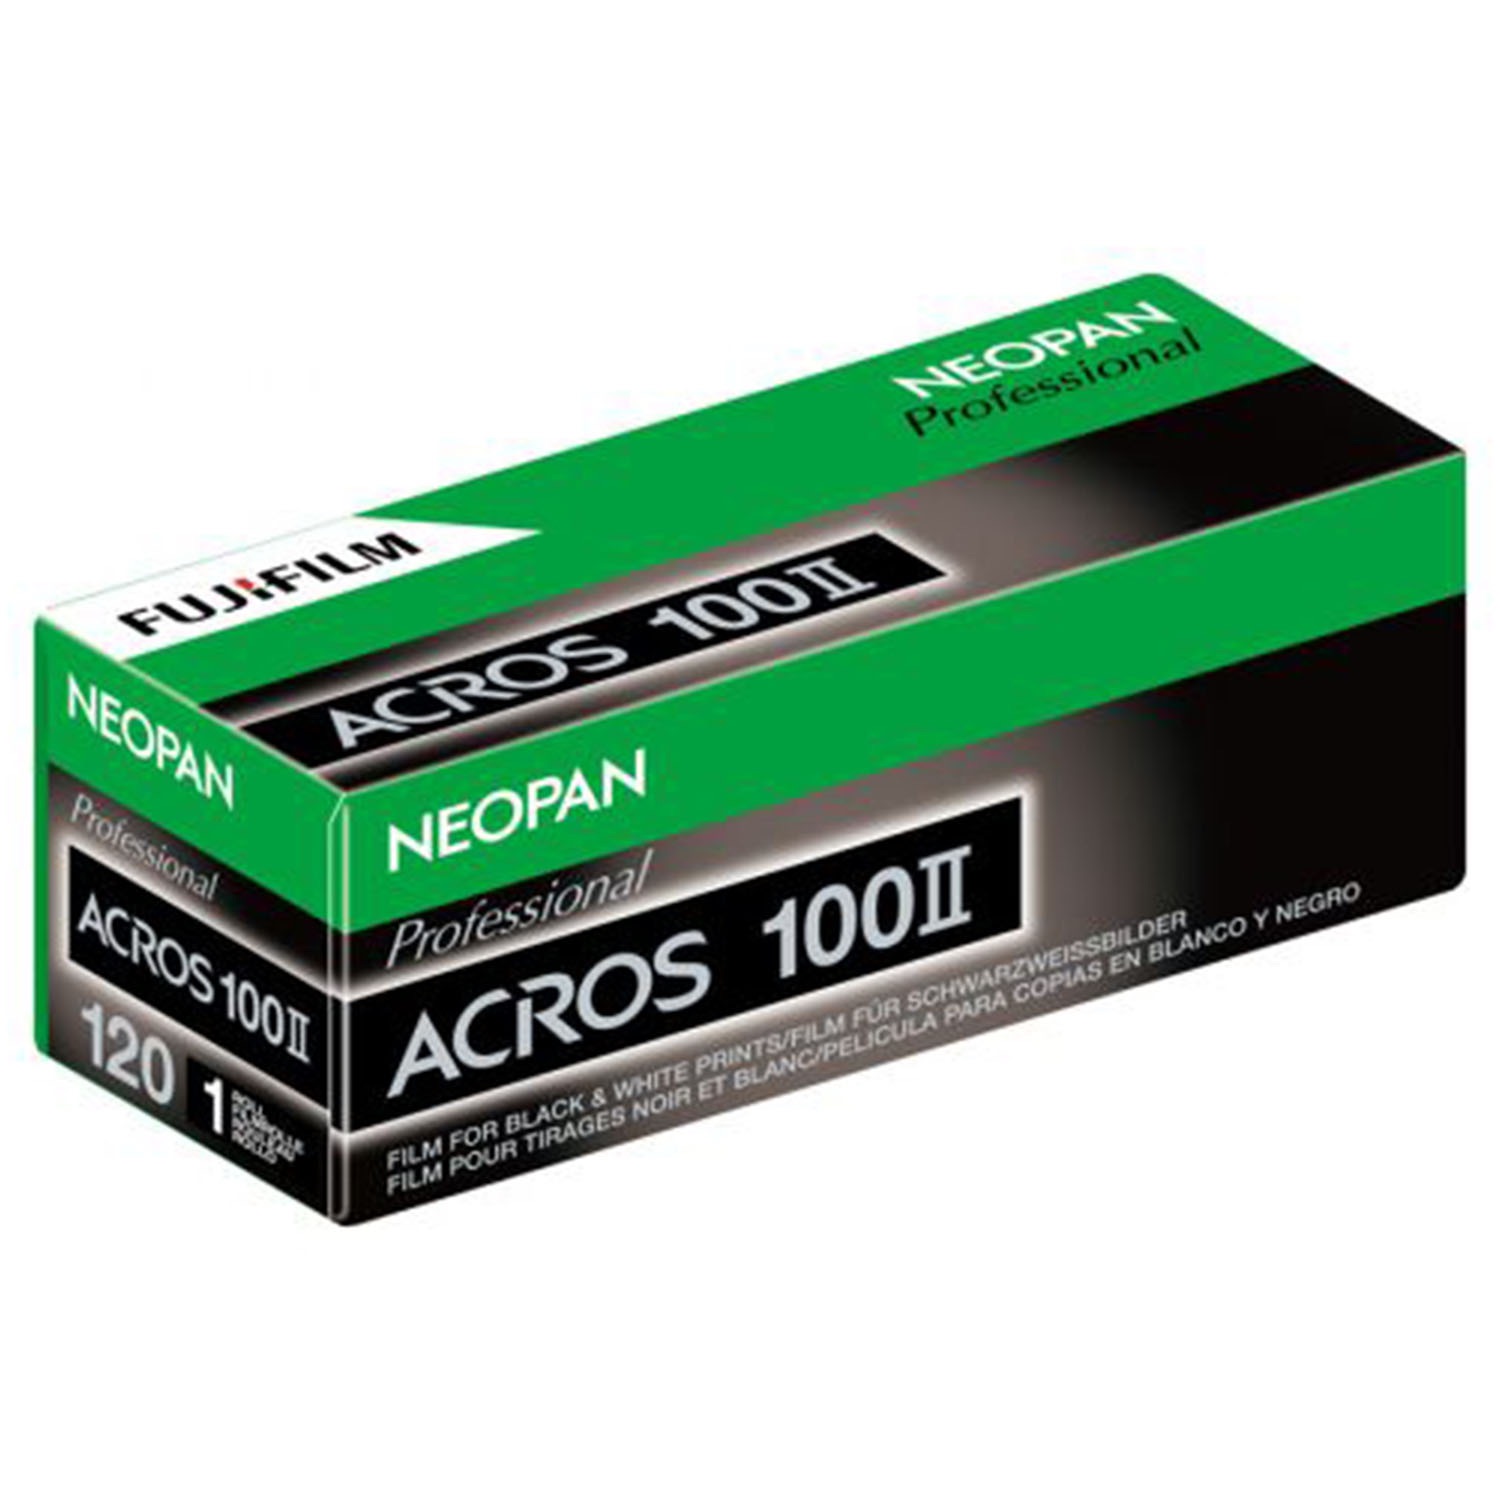 Fujifilm Acros Neopan 100 II - 120 Main Image